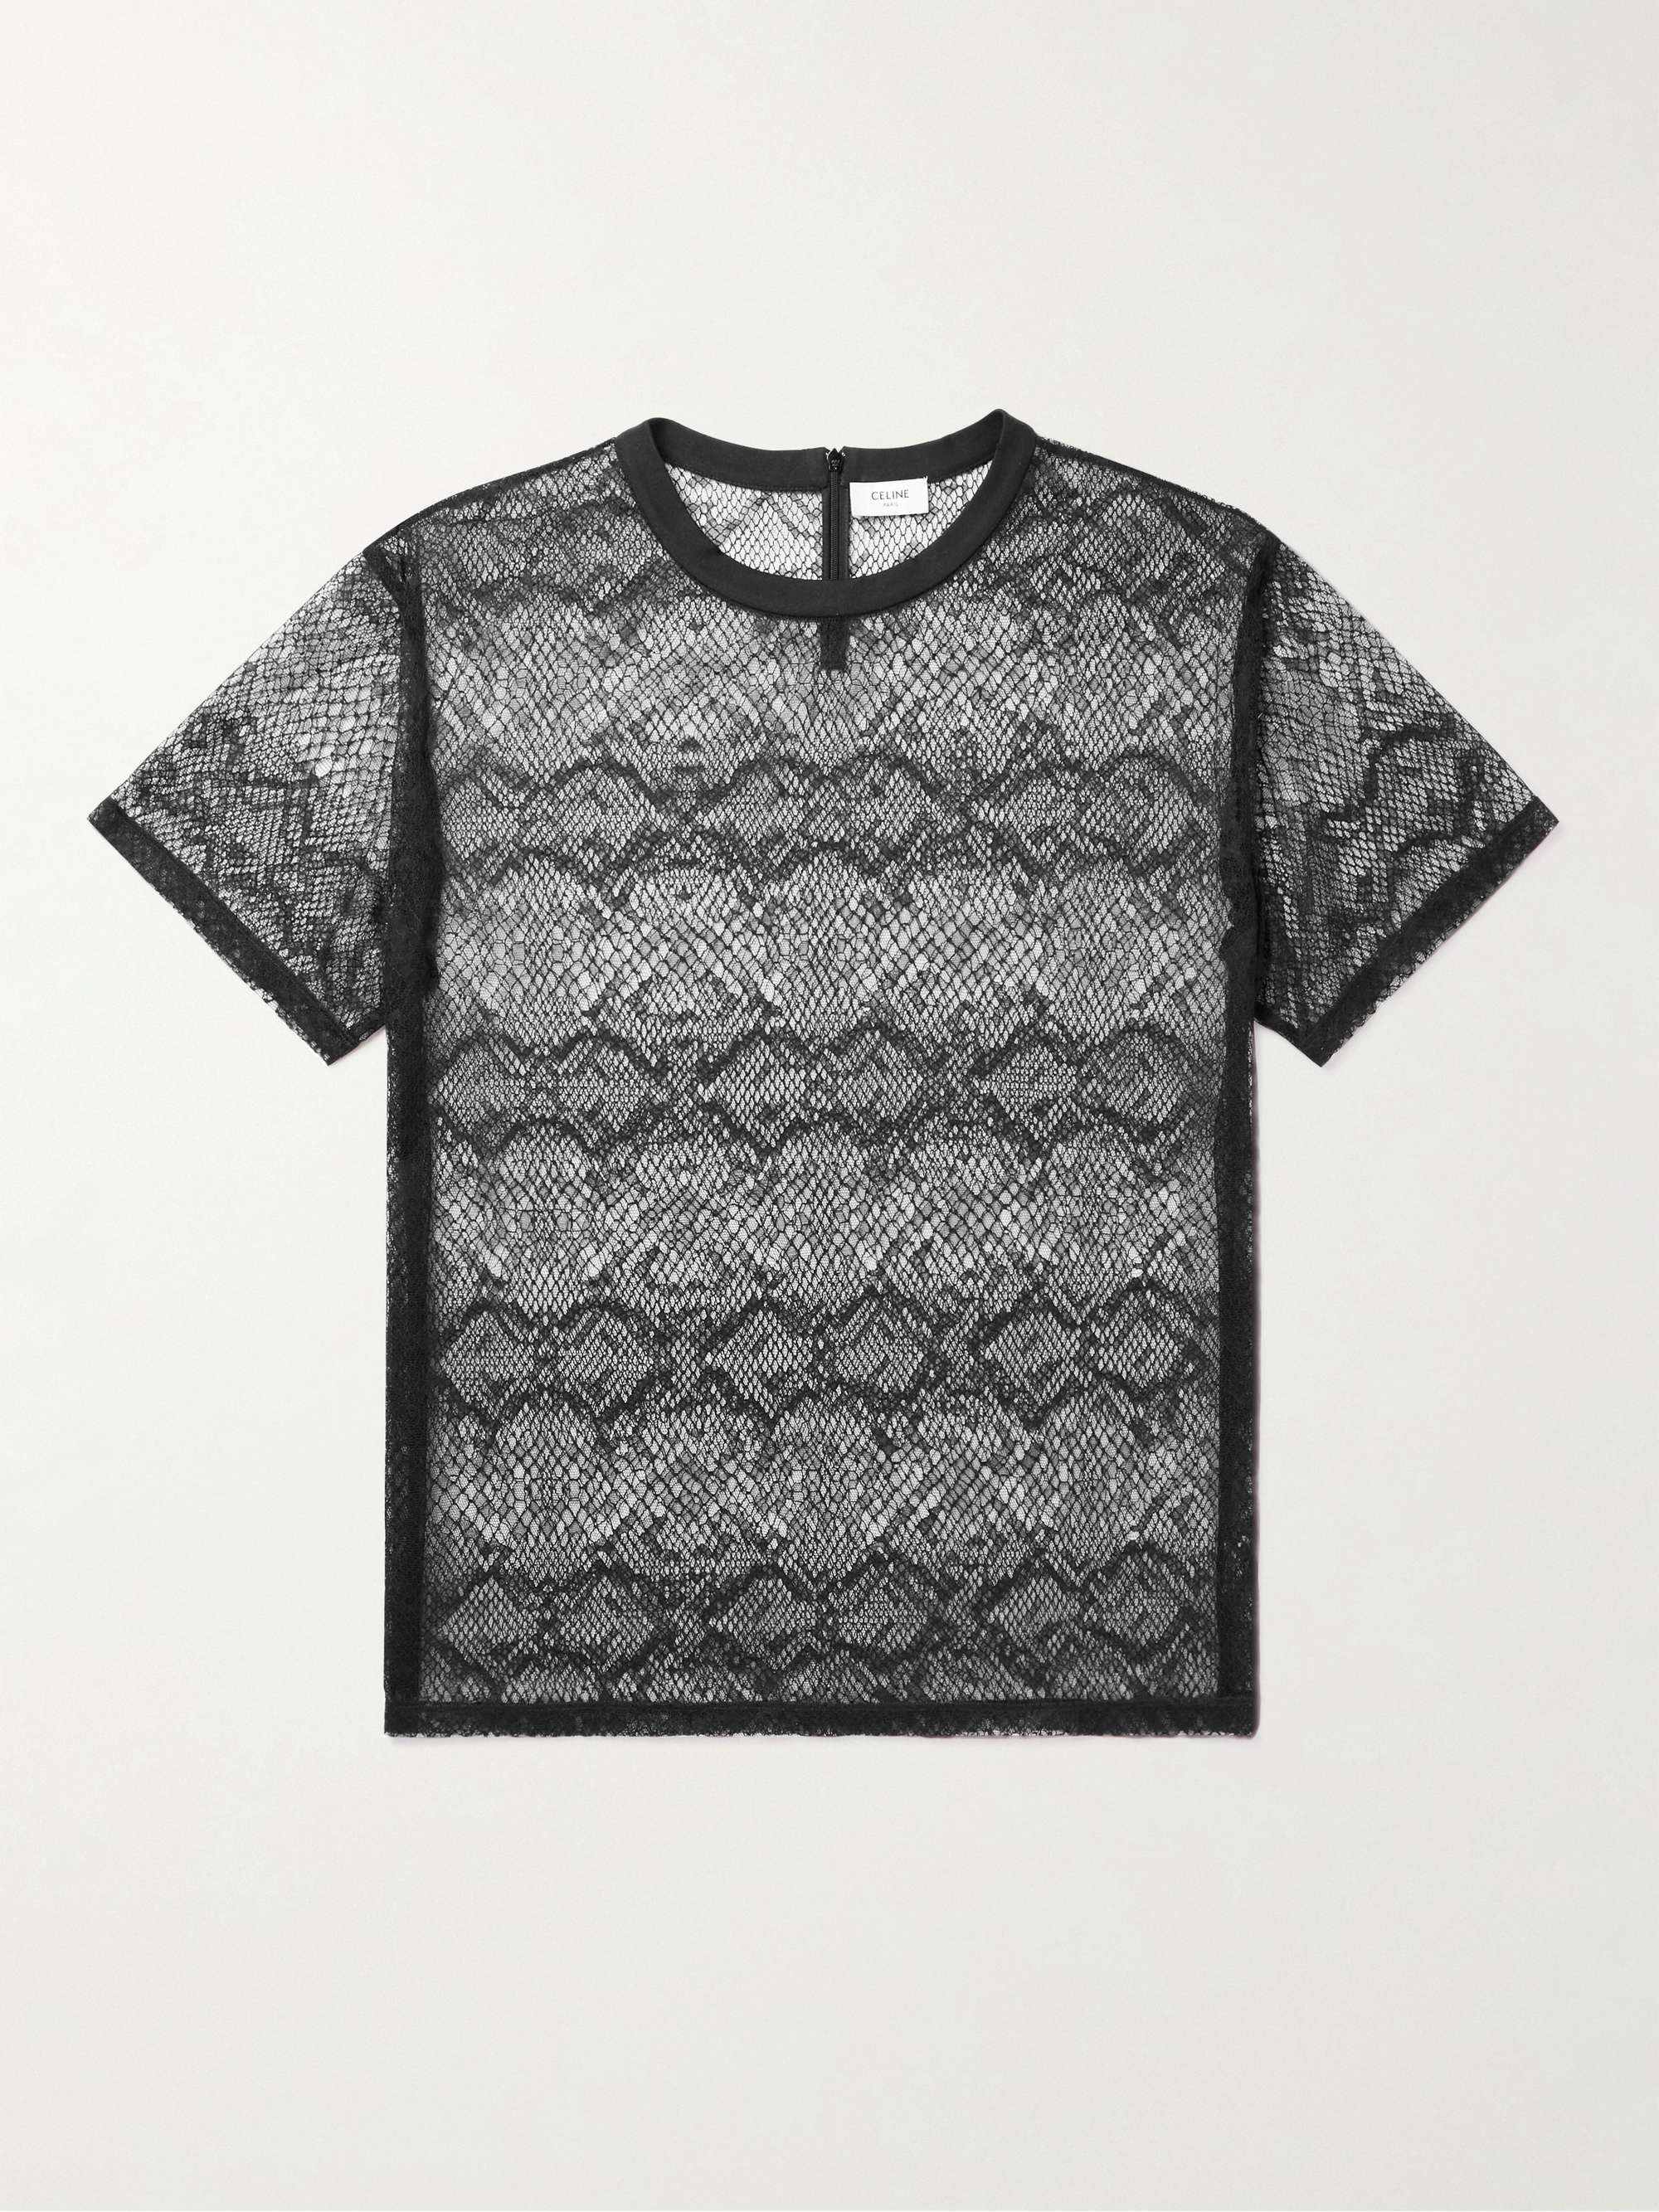 CELINE HOMME Lace T-Shirt for Men | MR PORTER